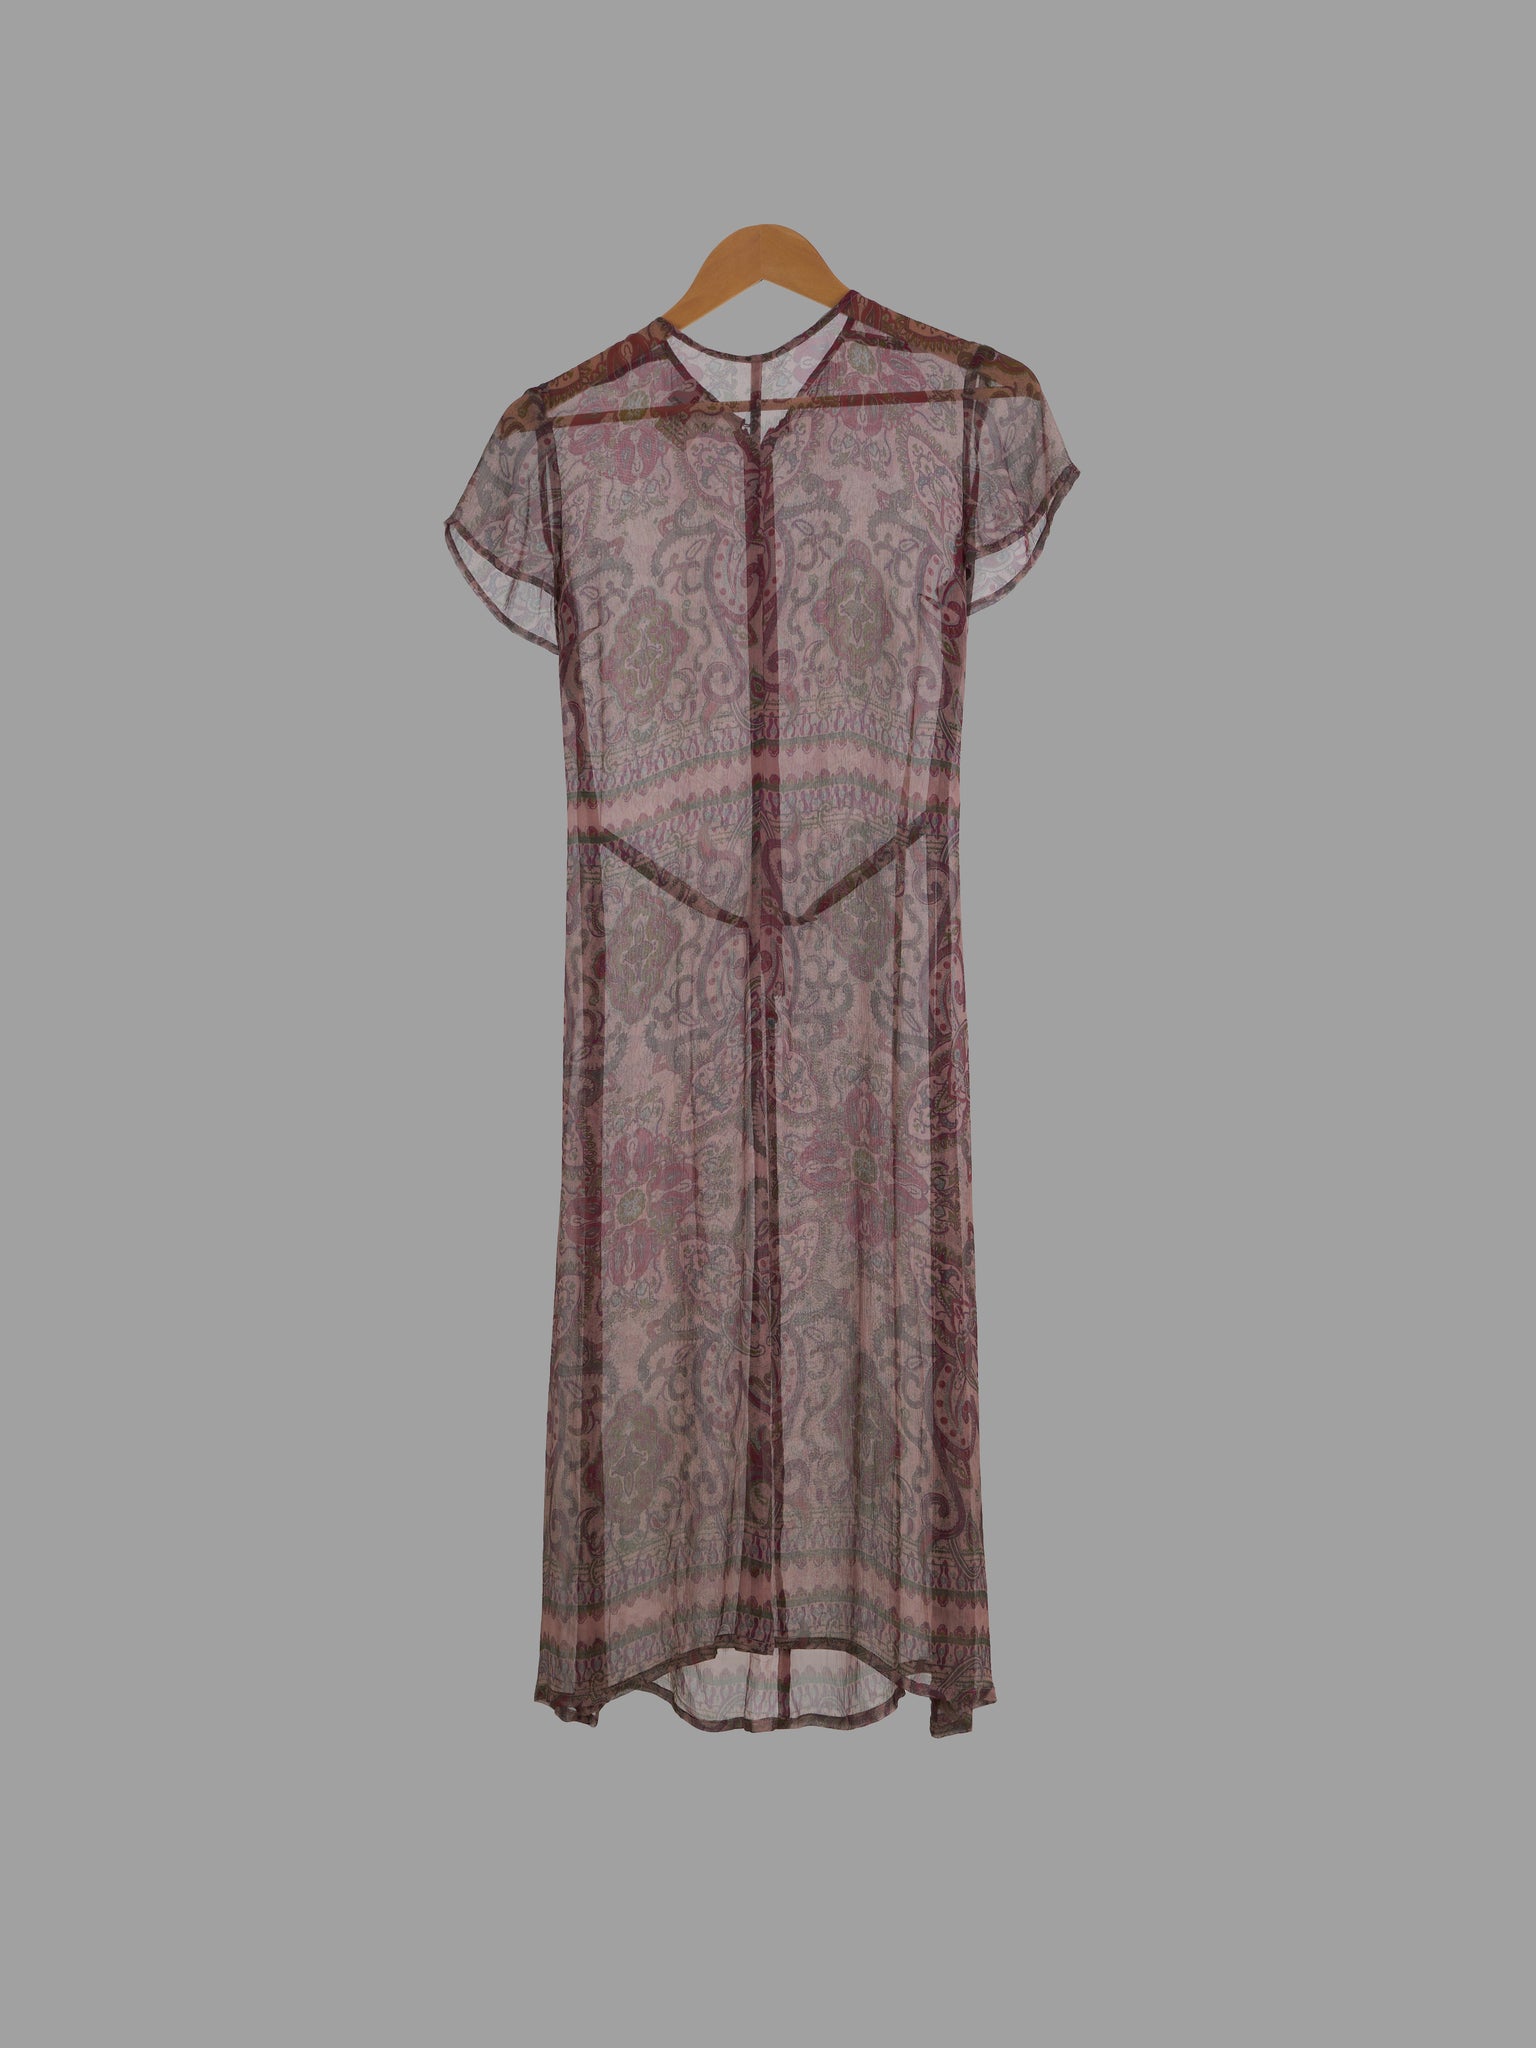 Dries Van Noten 1990s sheer paisley printed silk cap sleeve dress - size 40